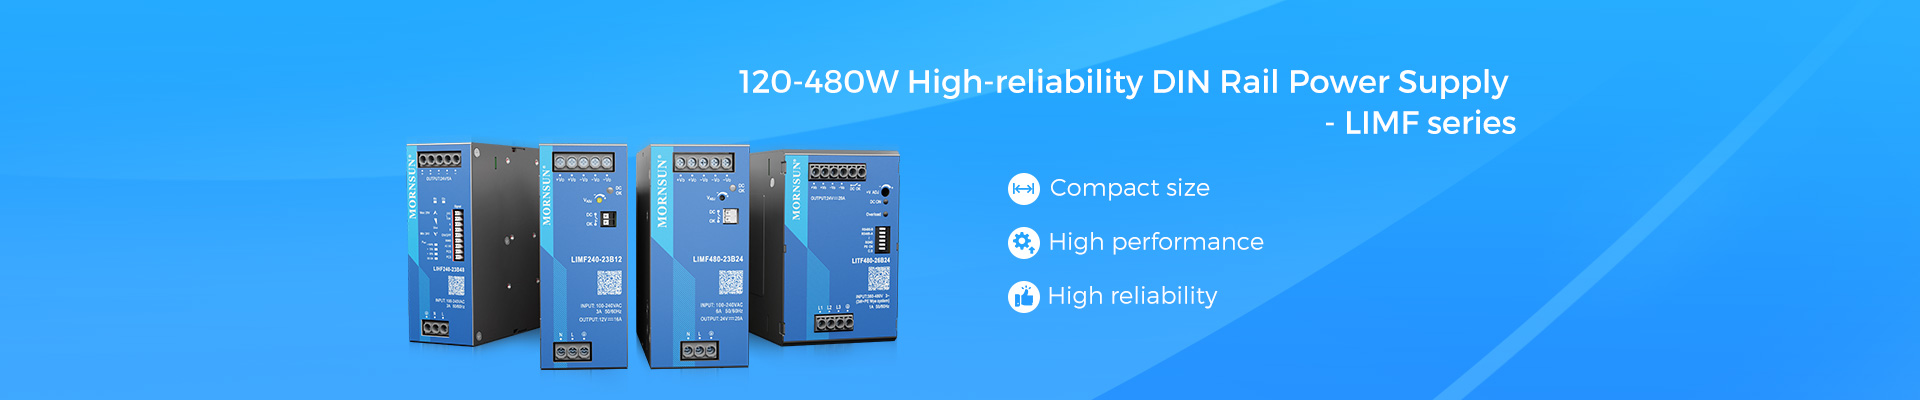 240-480W High-reliability DIN Rail Power Supply——LIMF series